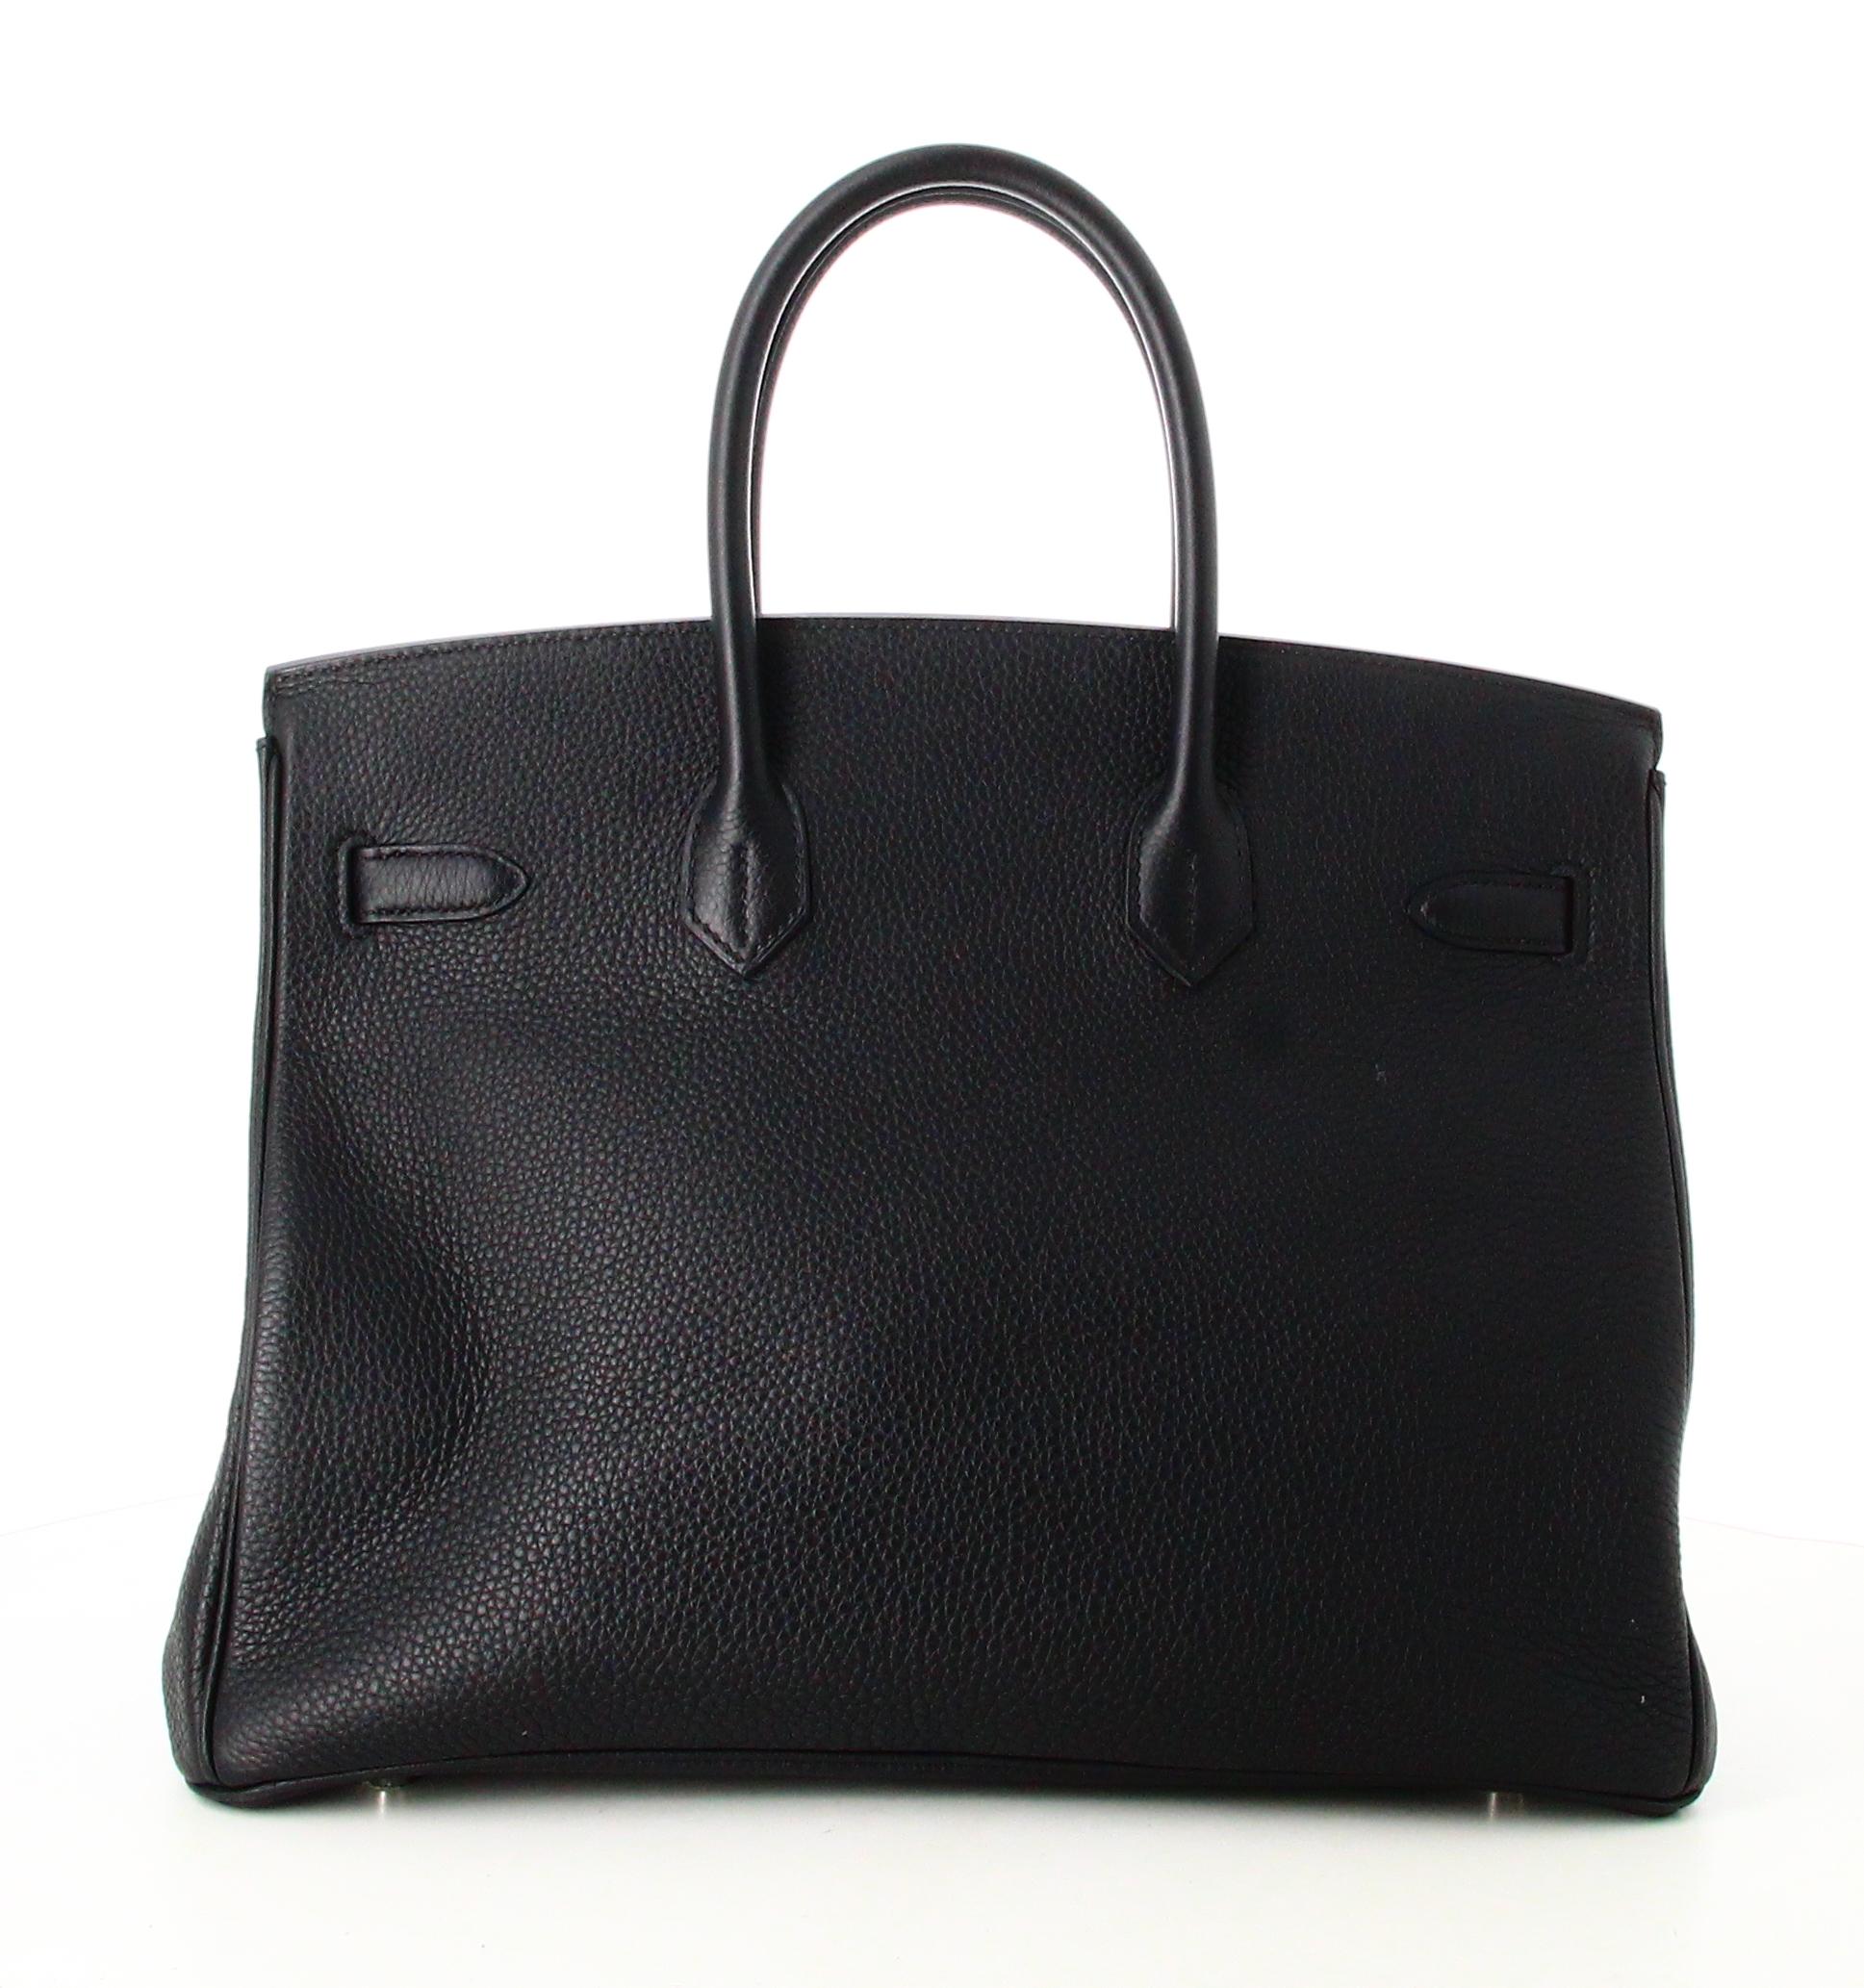 Hermes Black Leather Togo Birkin Bag 35

- Very good condition. No signs of wear.
- Hermès Birkin Handbag 35
- Black togo leather
- Two black leather straps 
- Key + silver padlock 
- Inside zipped pocket 
